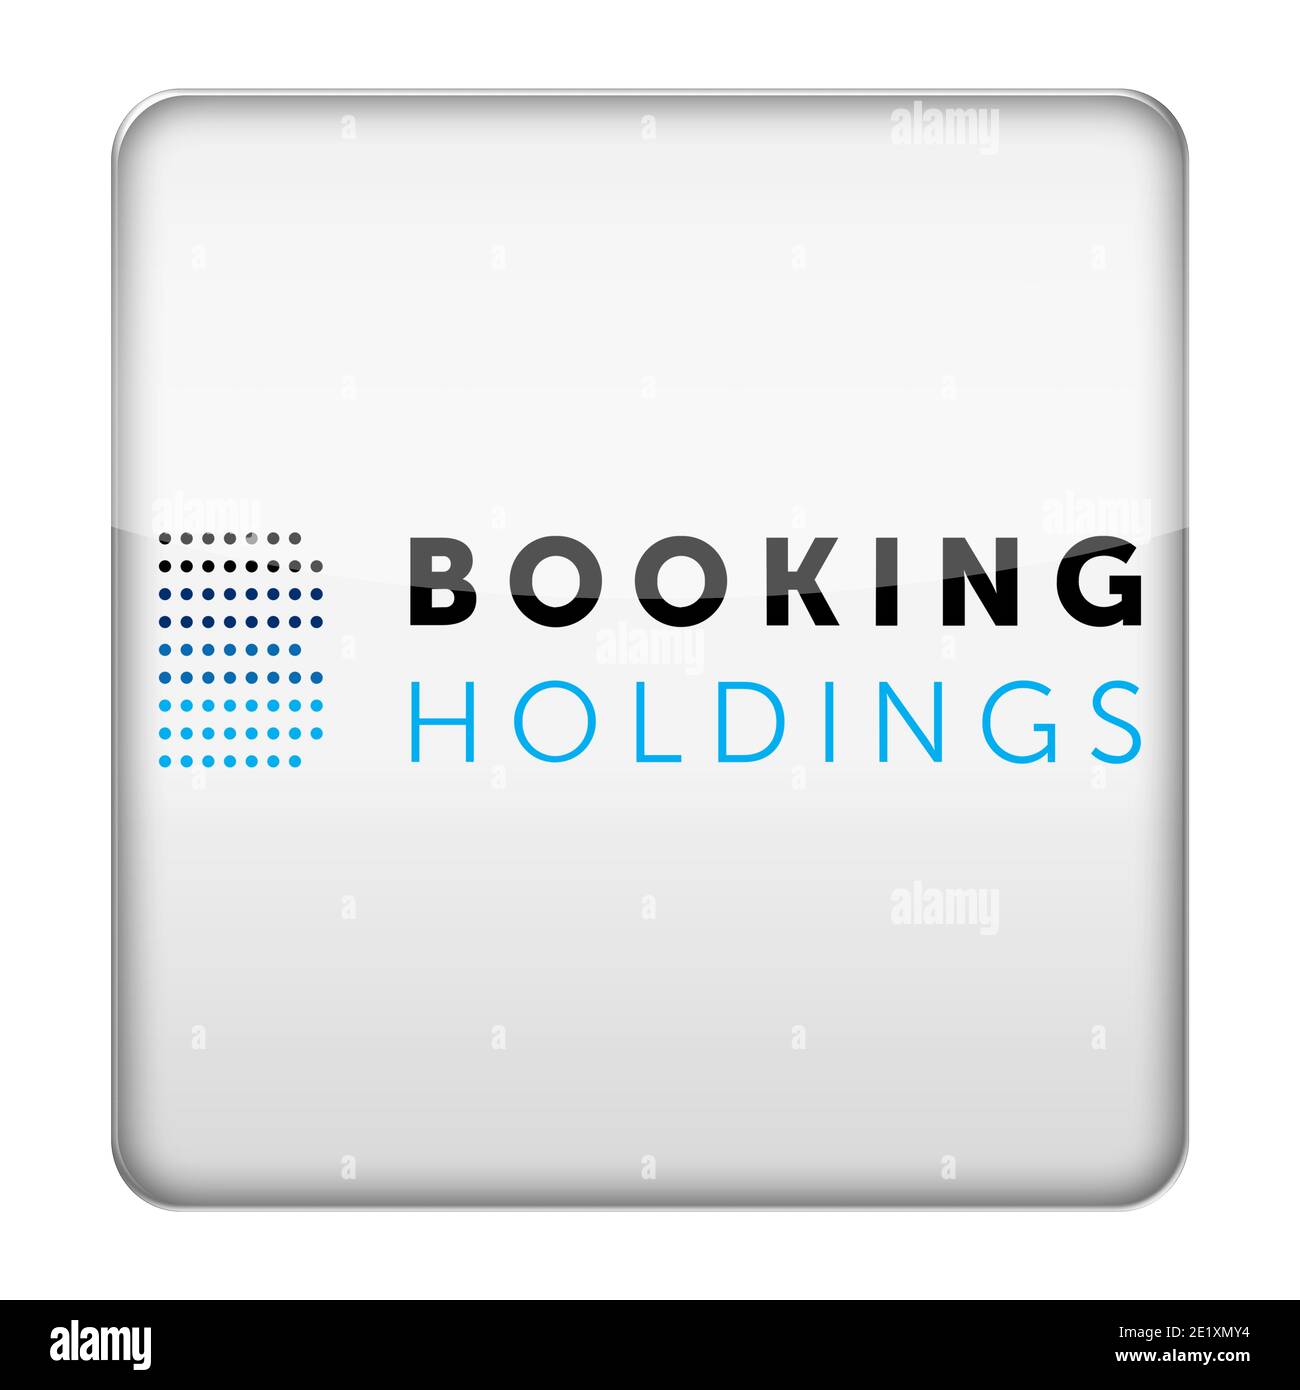 Booking Holdings logo icon Stock Photo